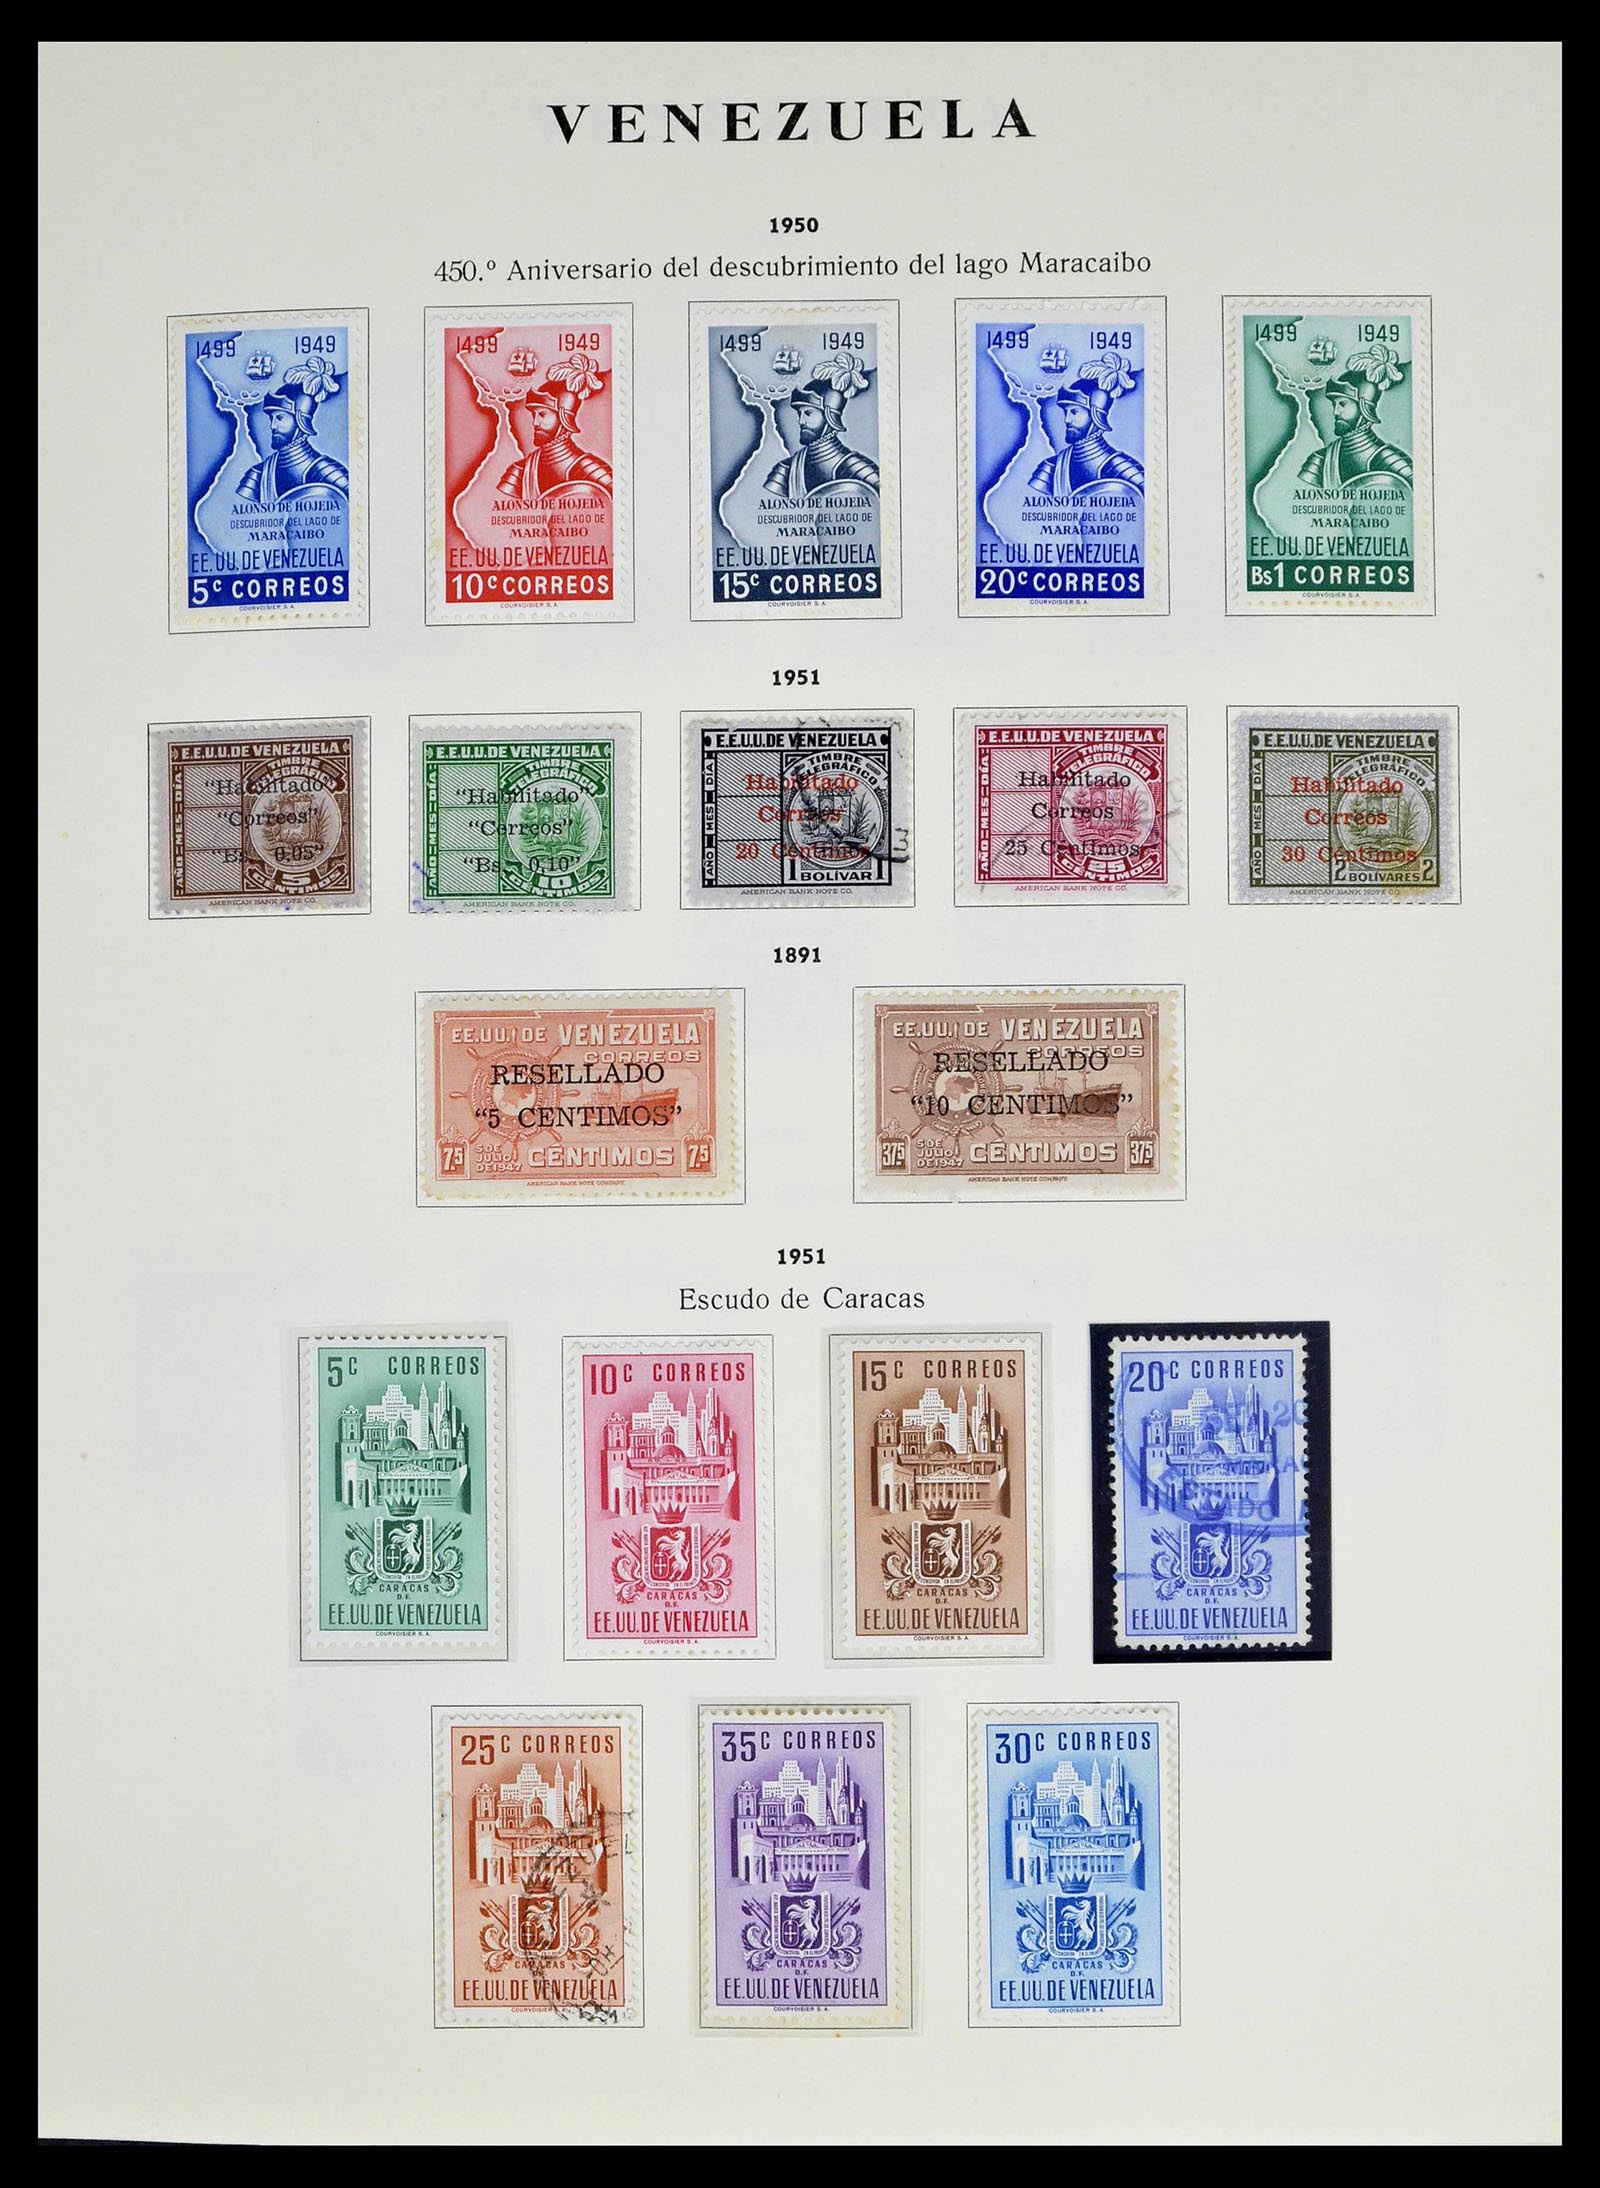 39223 0022 - Stamp collection 39223 Venezuela 1859-1984.